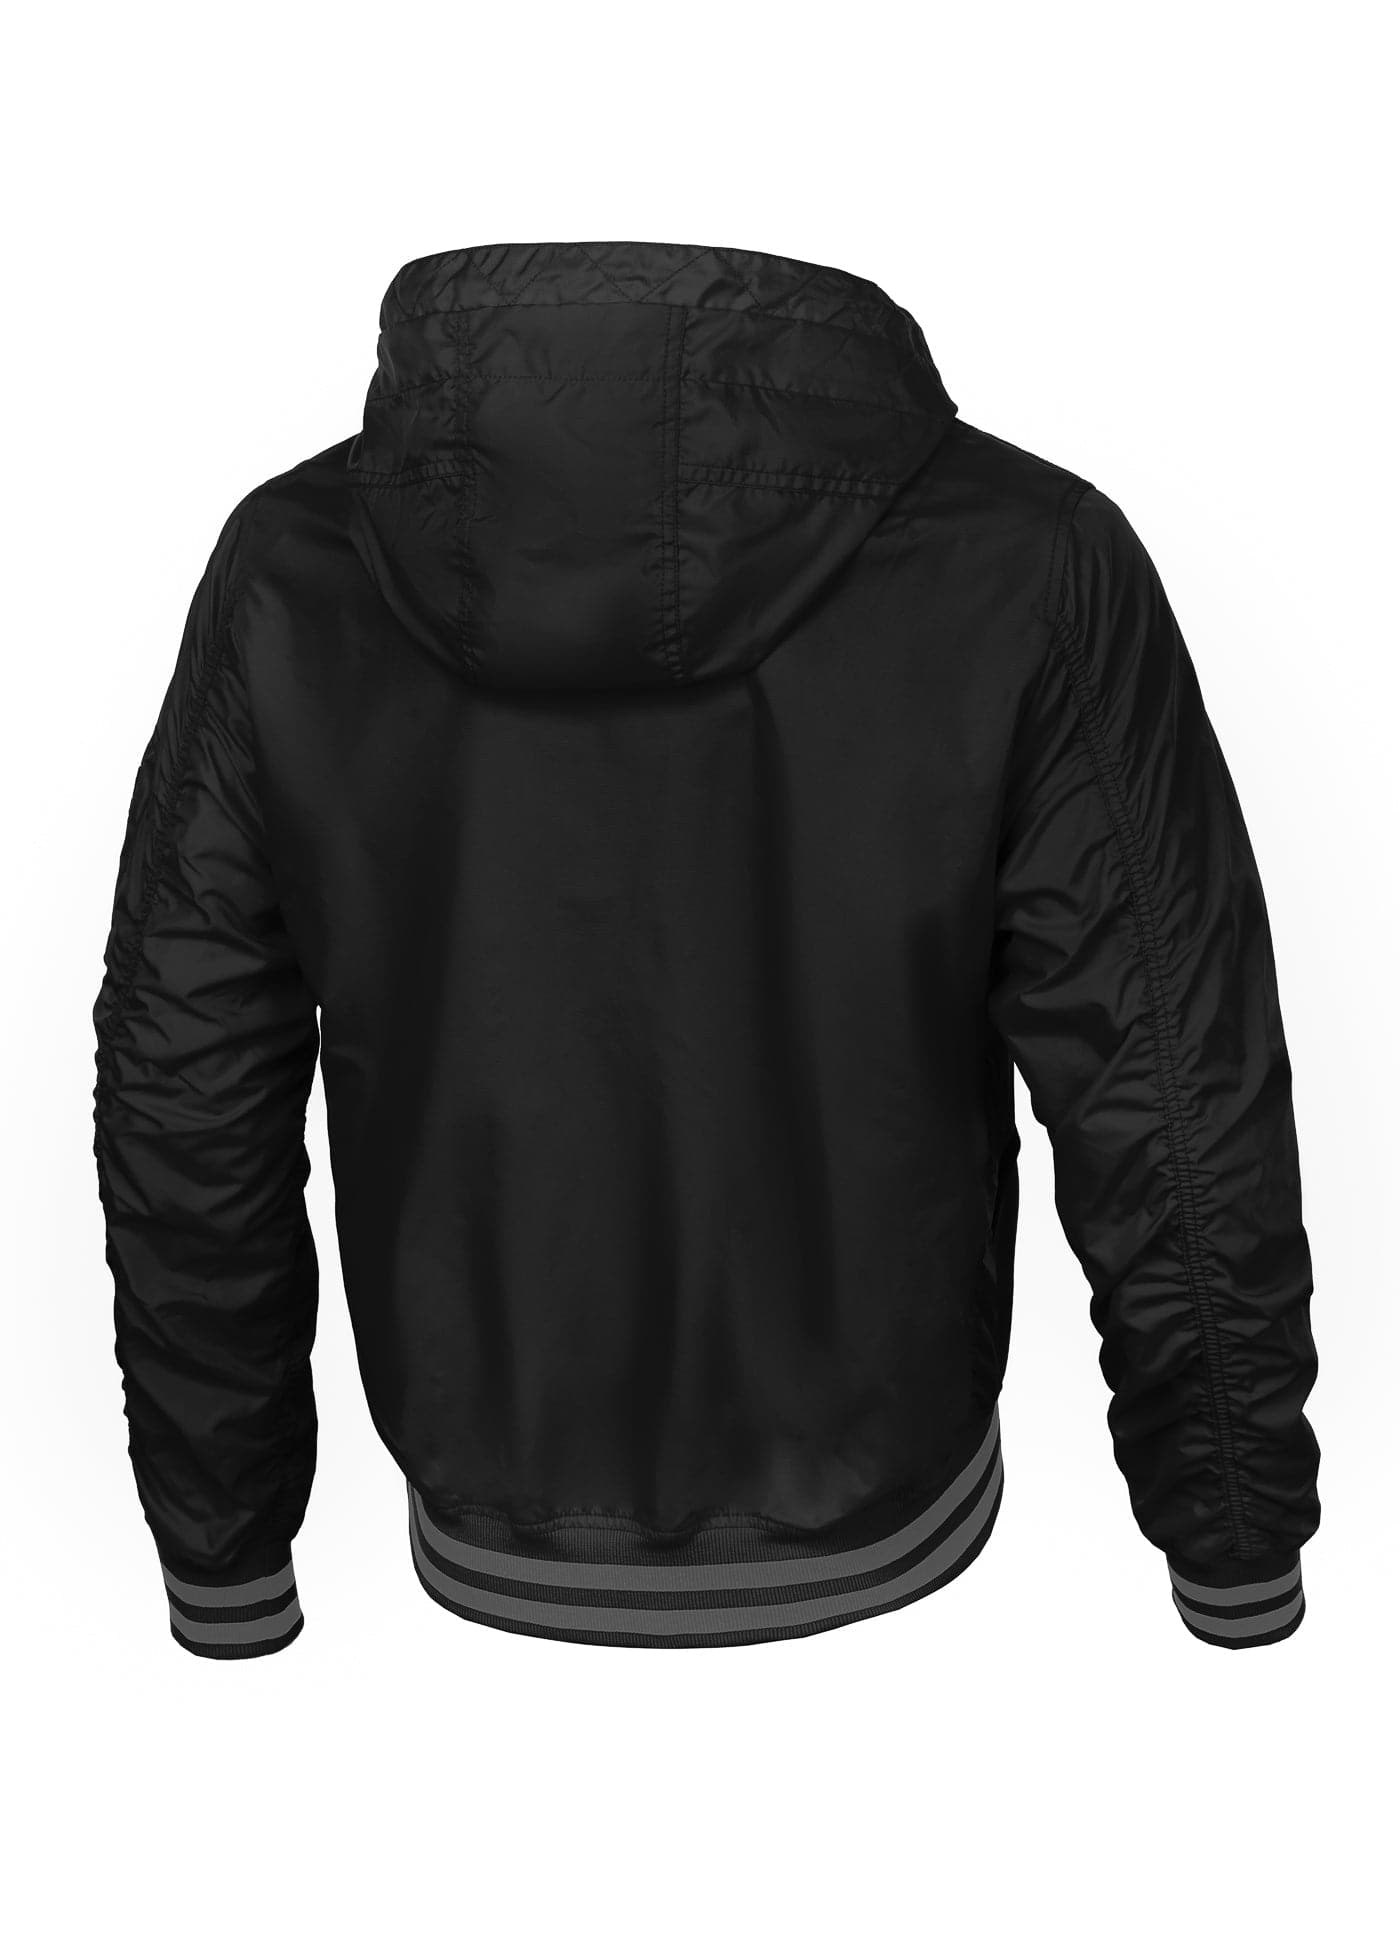 Buy OVERPARK Black Jacket